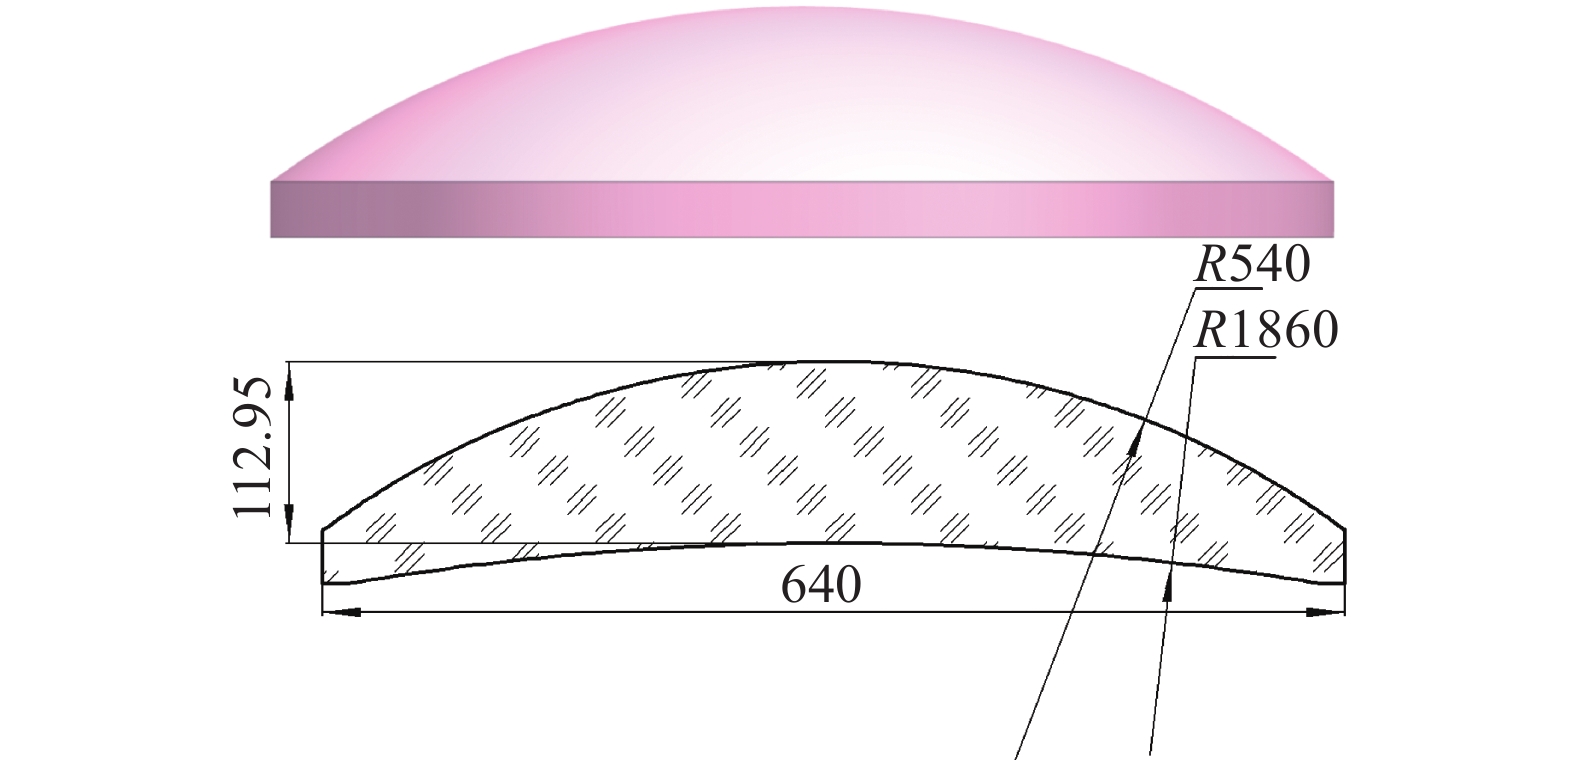 Lens shape and dimension parameters